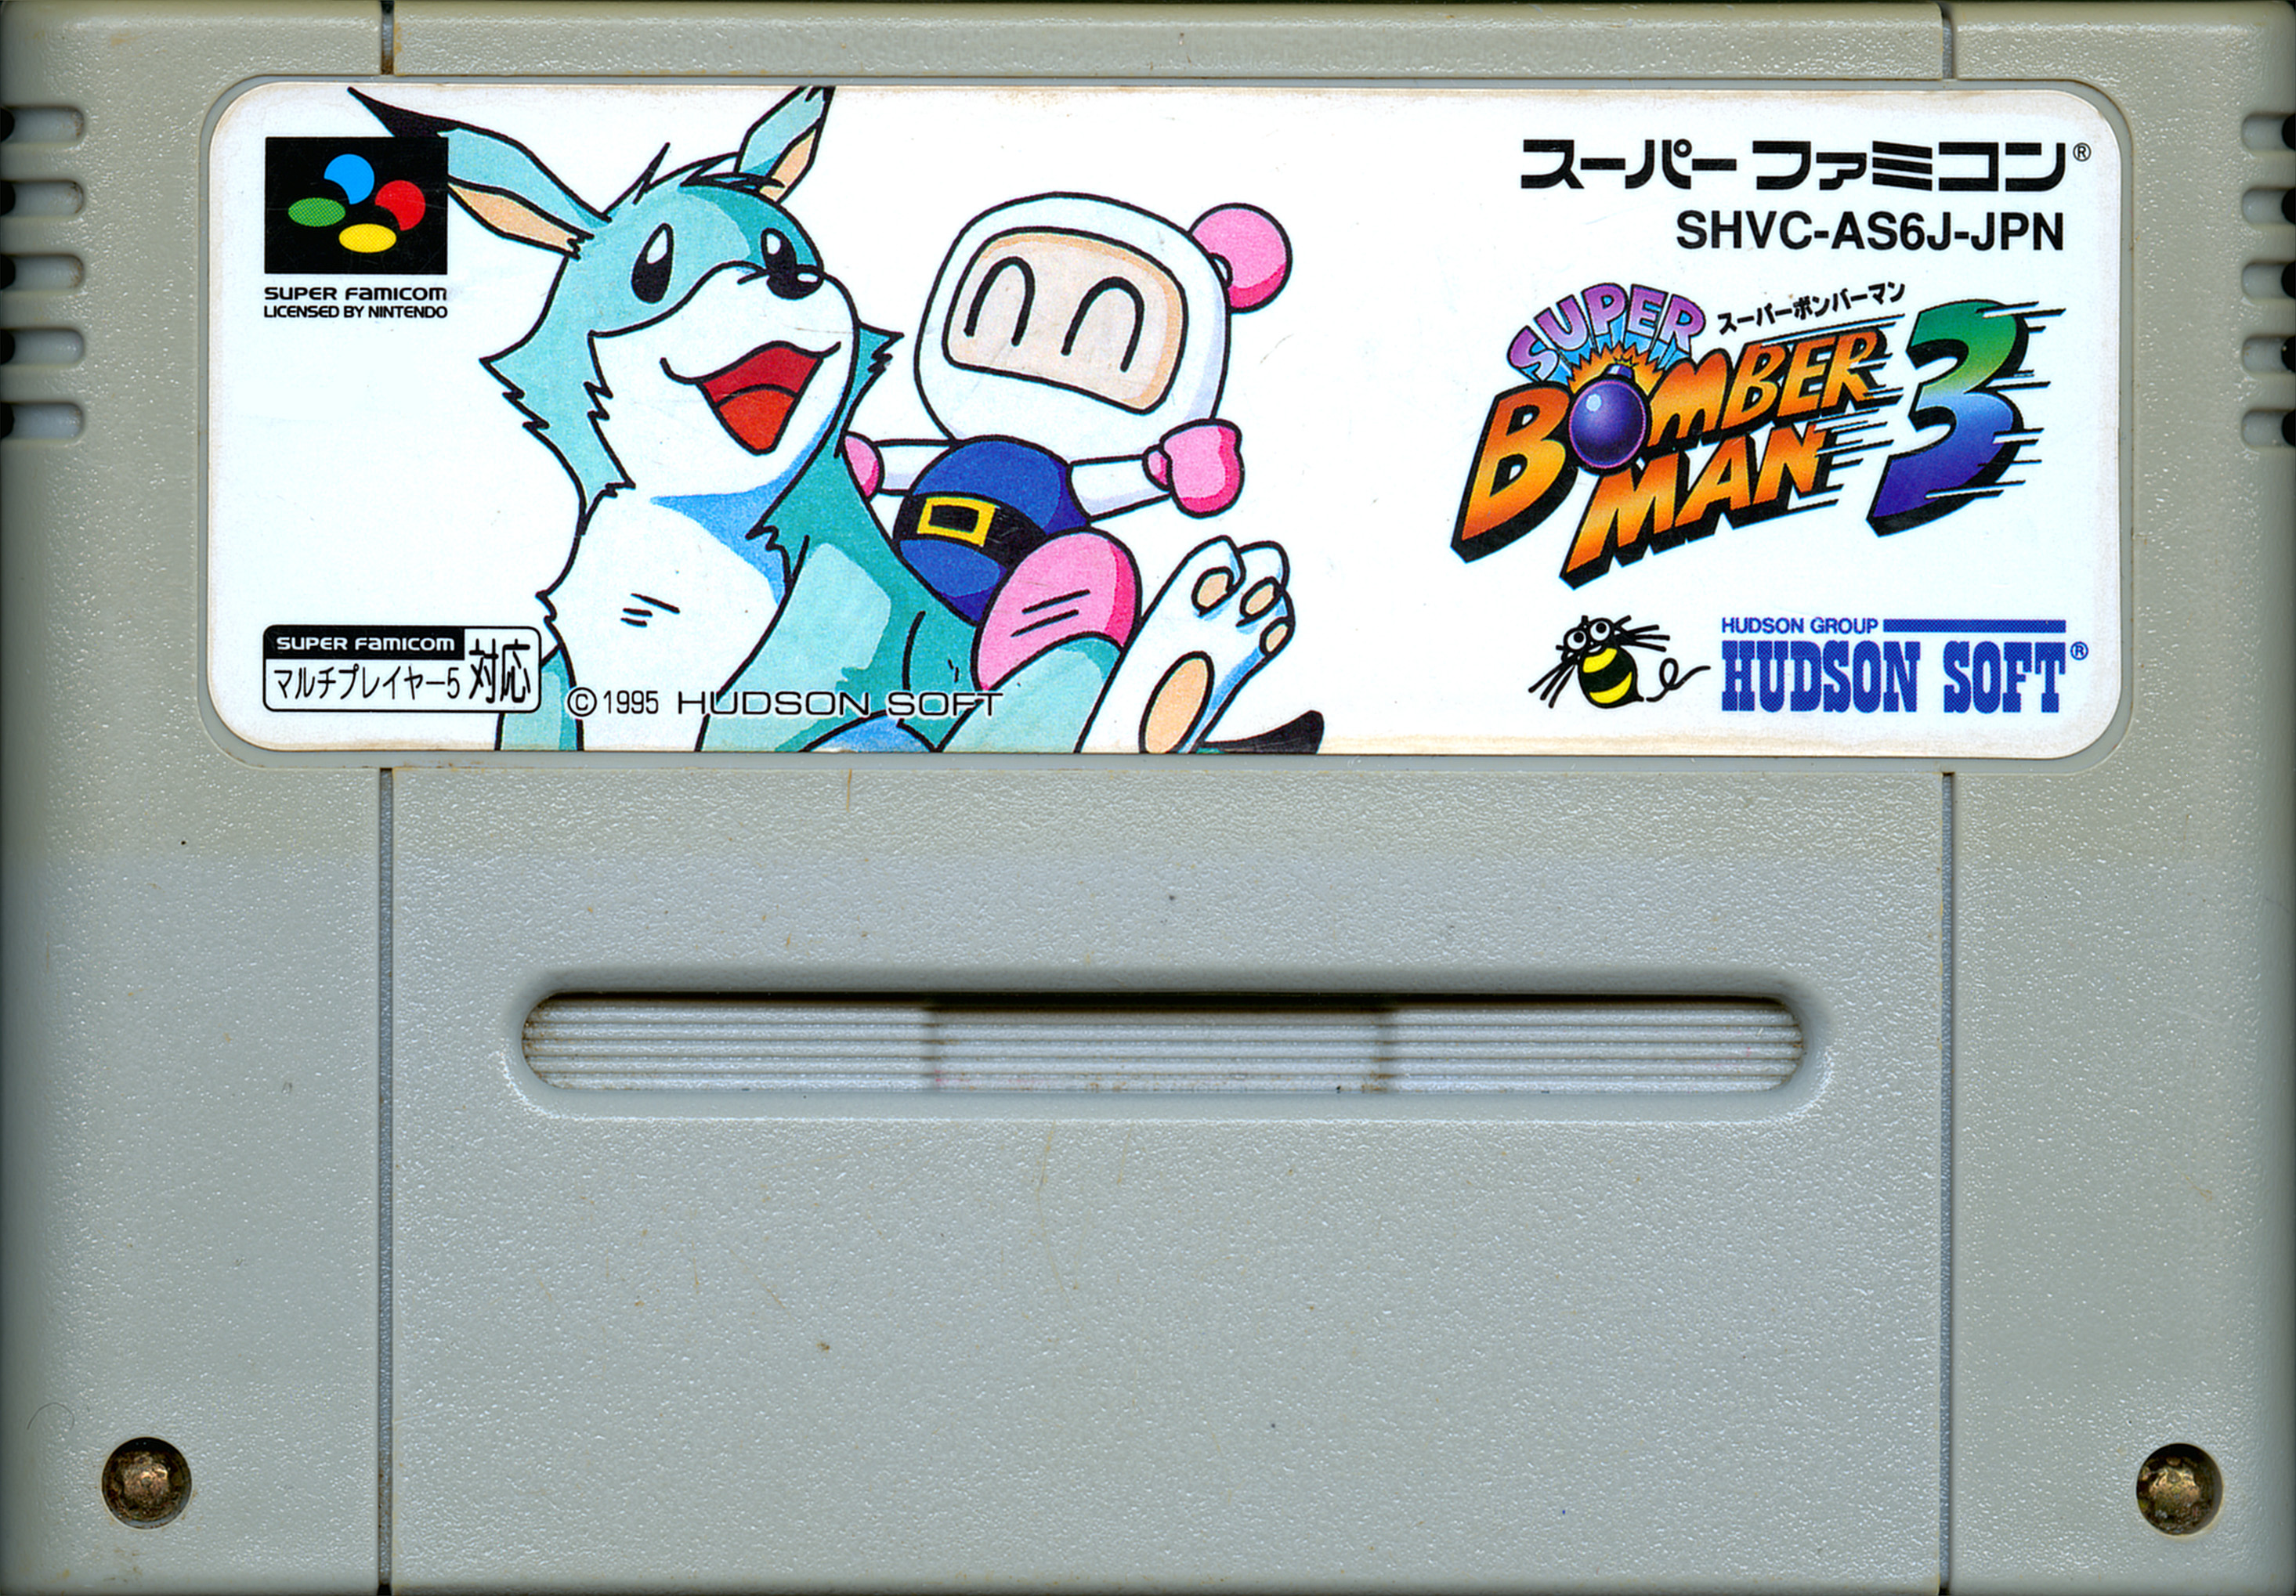 Super Bomberman 3 Super Nintendo SNES Video Game 